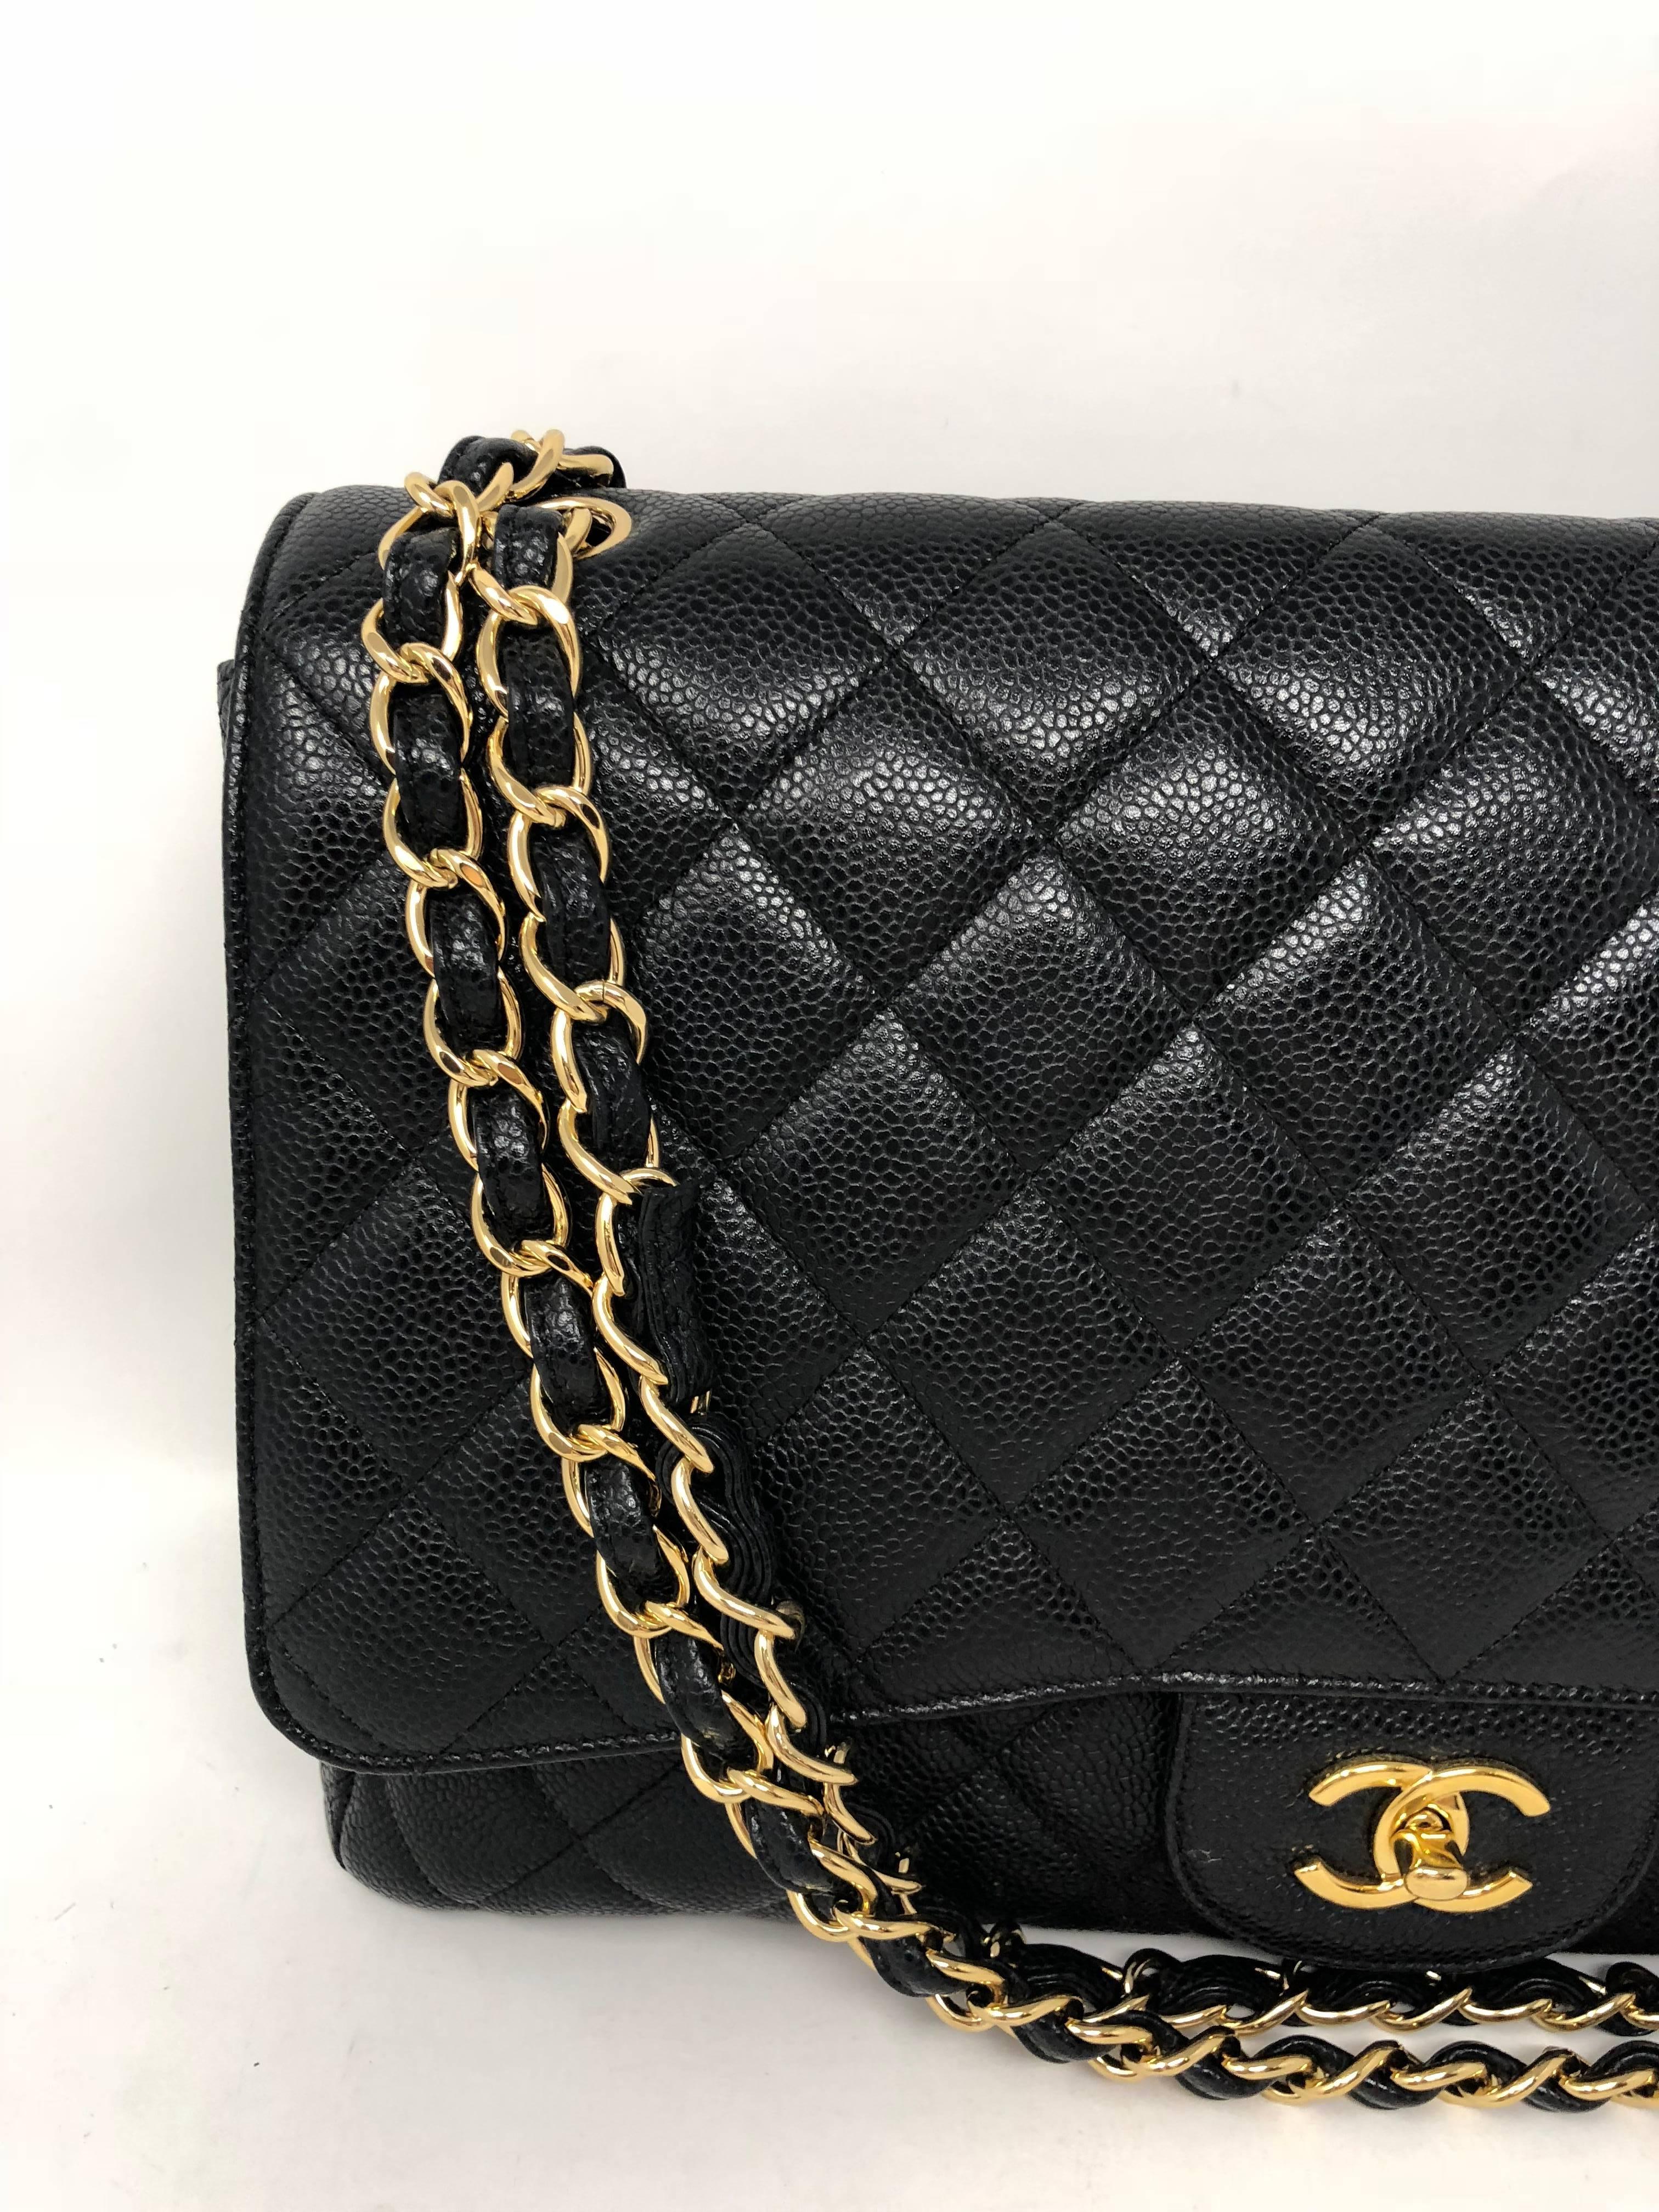 Chanel Black Caviar Leather Maxi Bag  1